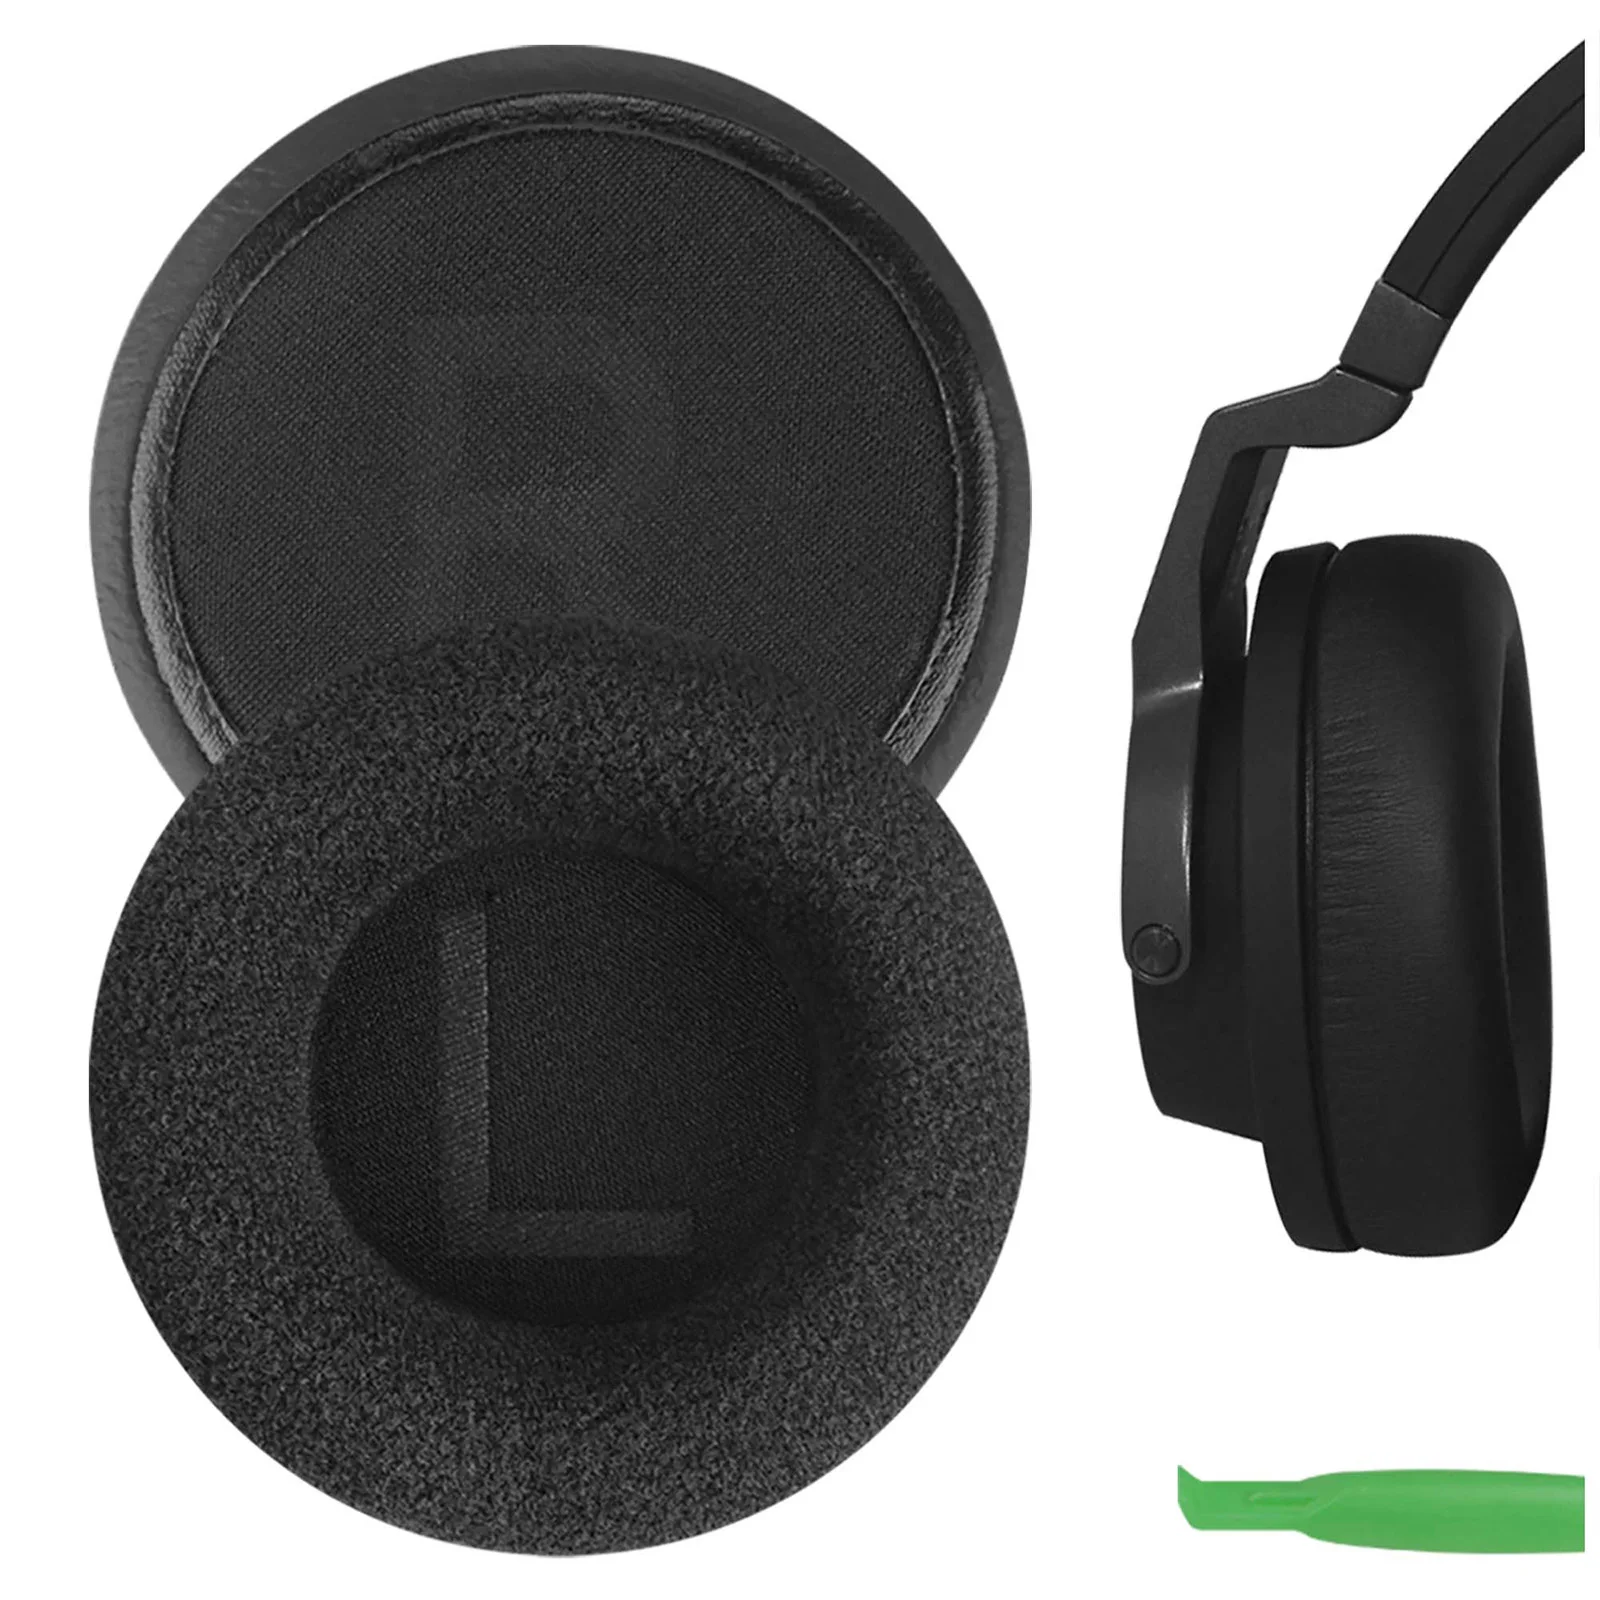 

Geekria Earpads for AKG K540 K545 K267 K182 Replacement Headphones Comfort Velour Ear Pads Cover Cushions Foam Earmuff